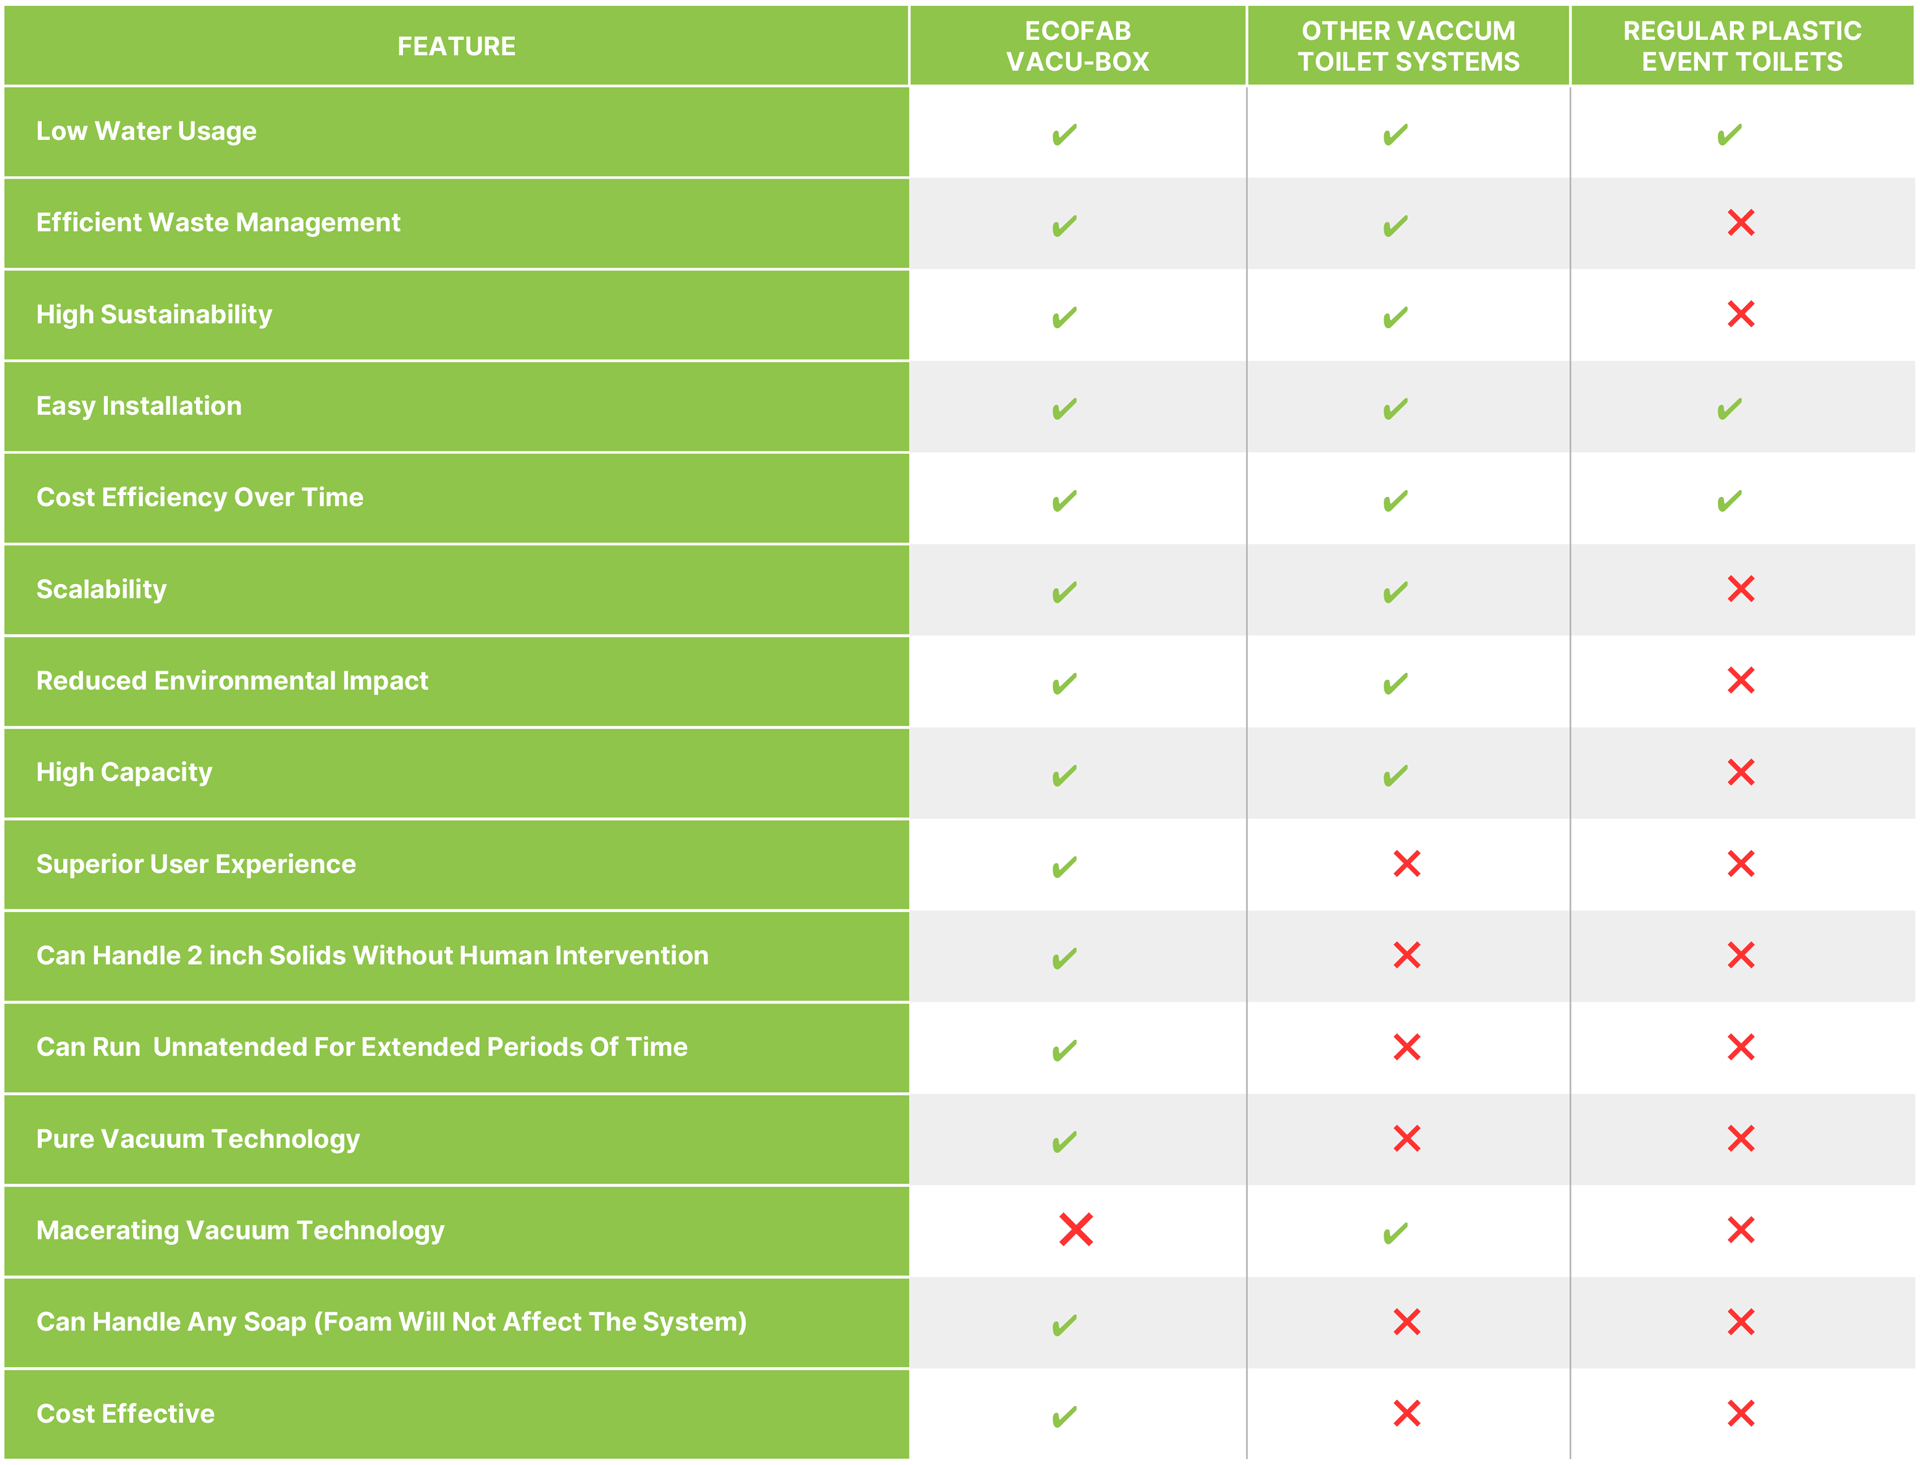 product comparison table